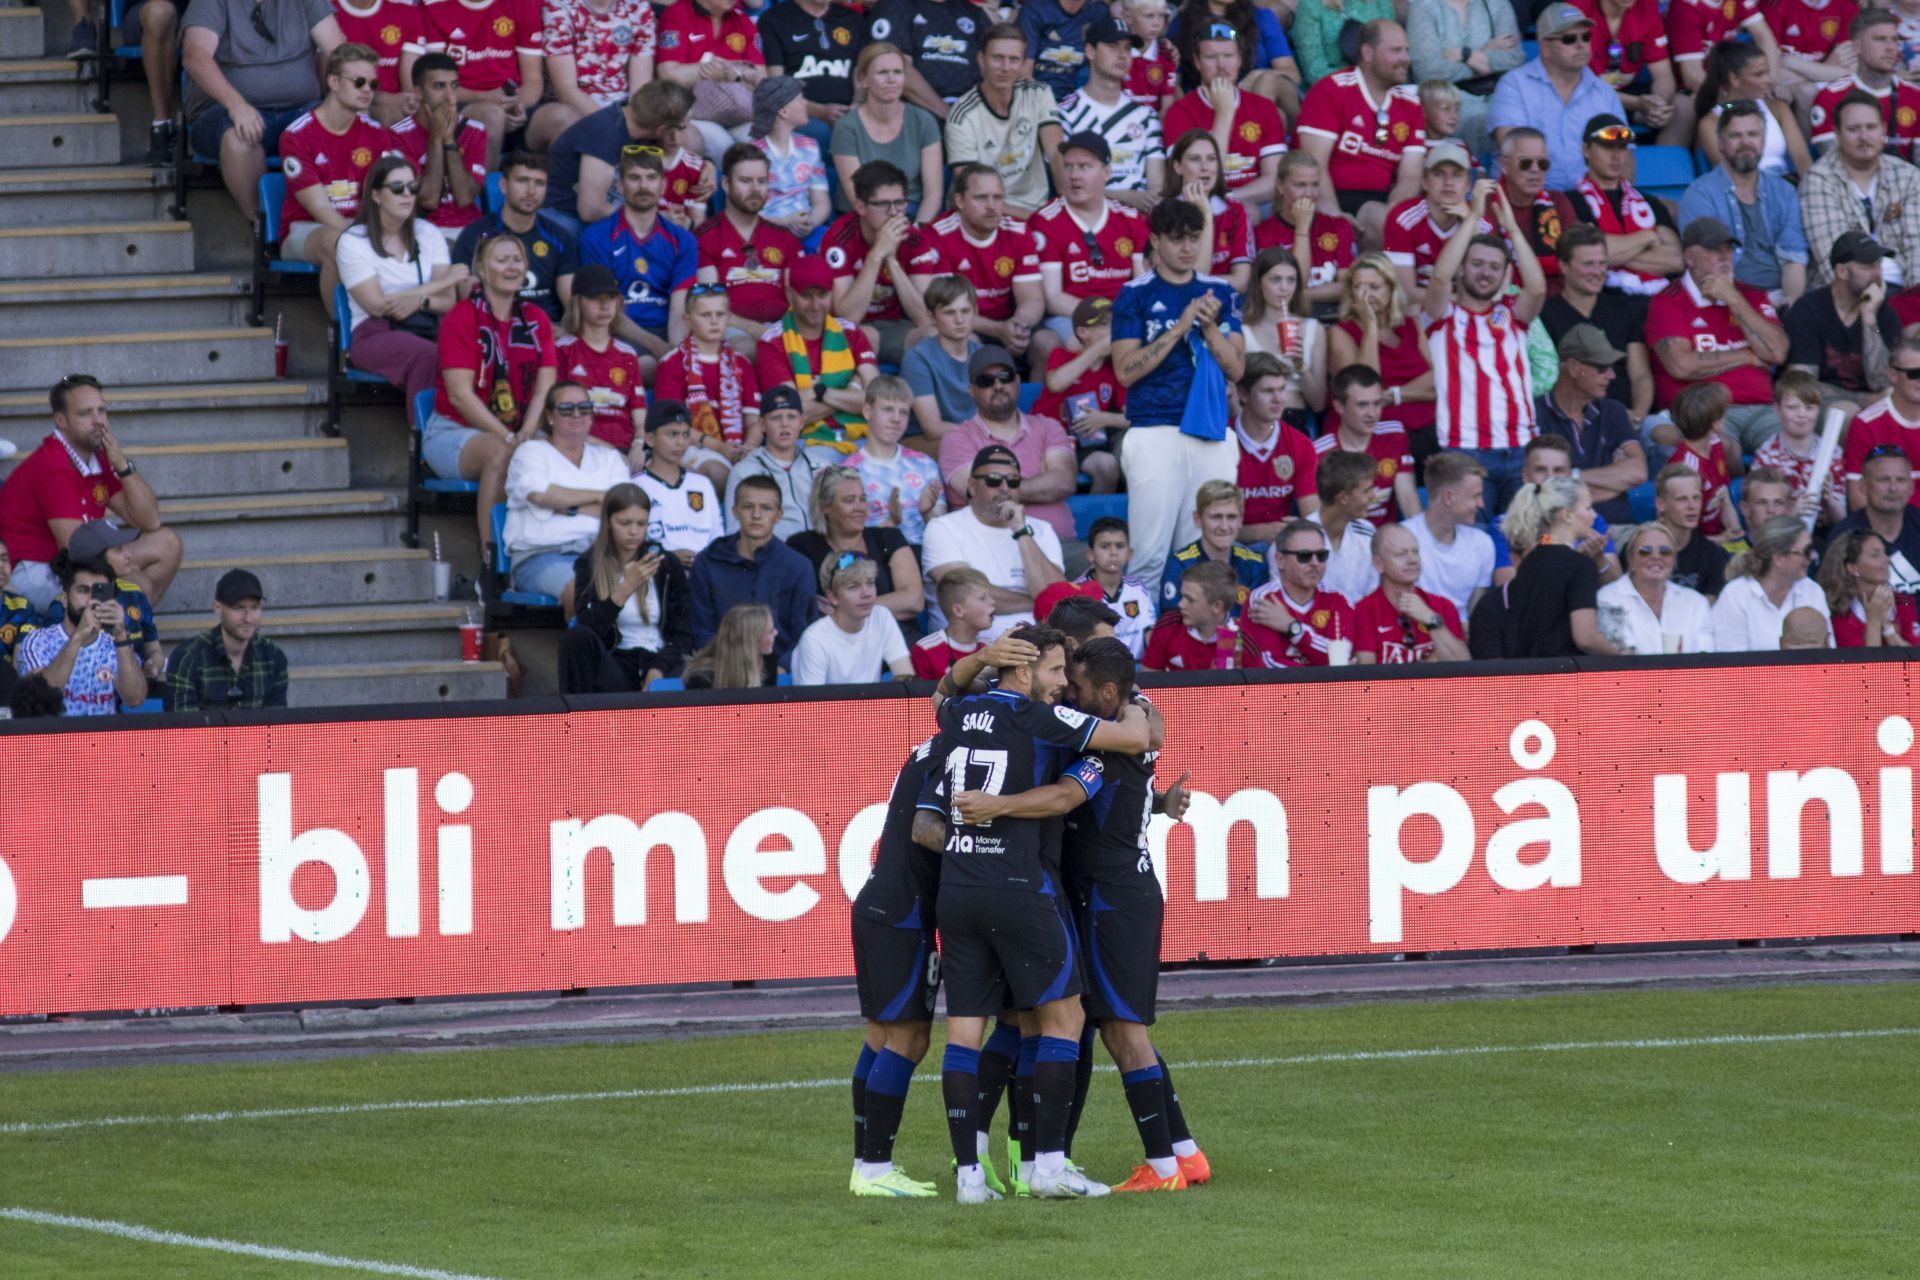 Atletico Madrid take on Getafe this week